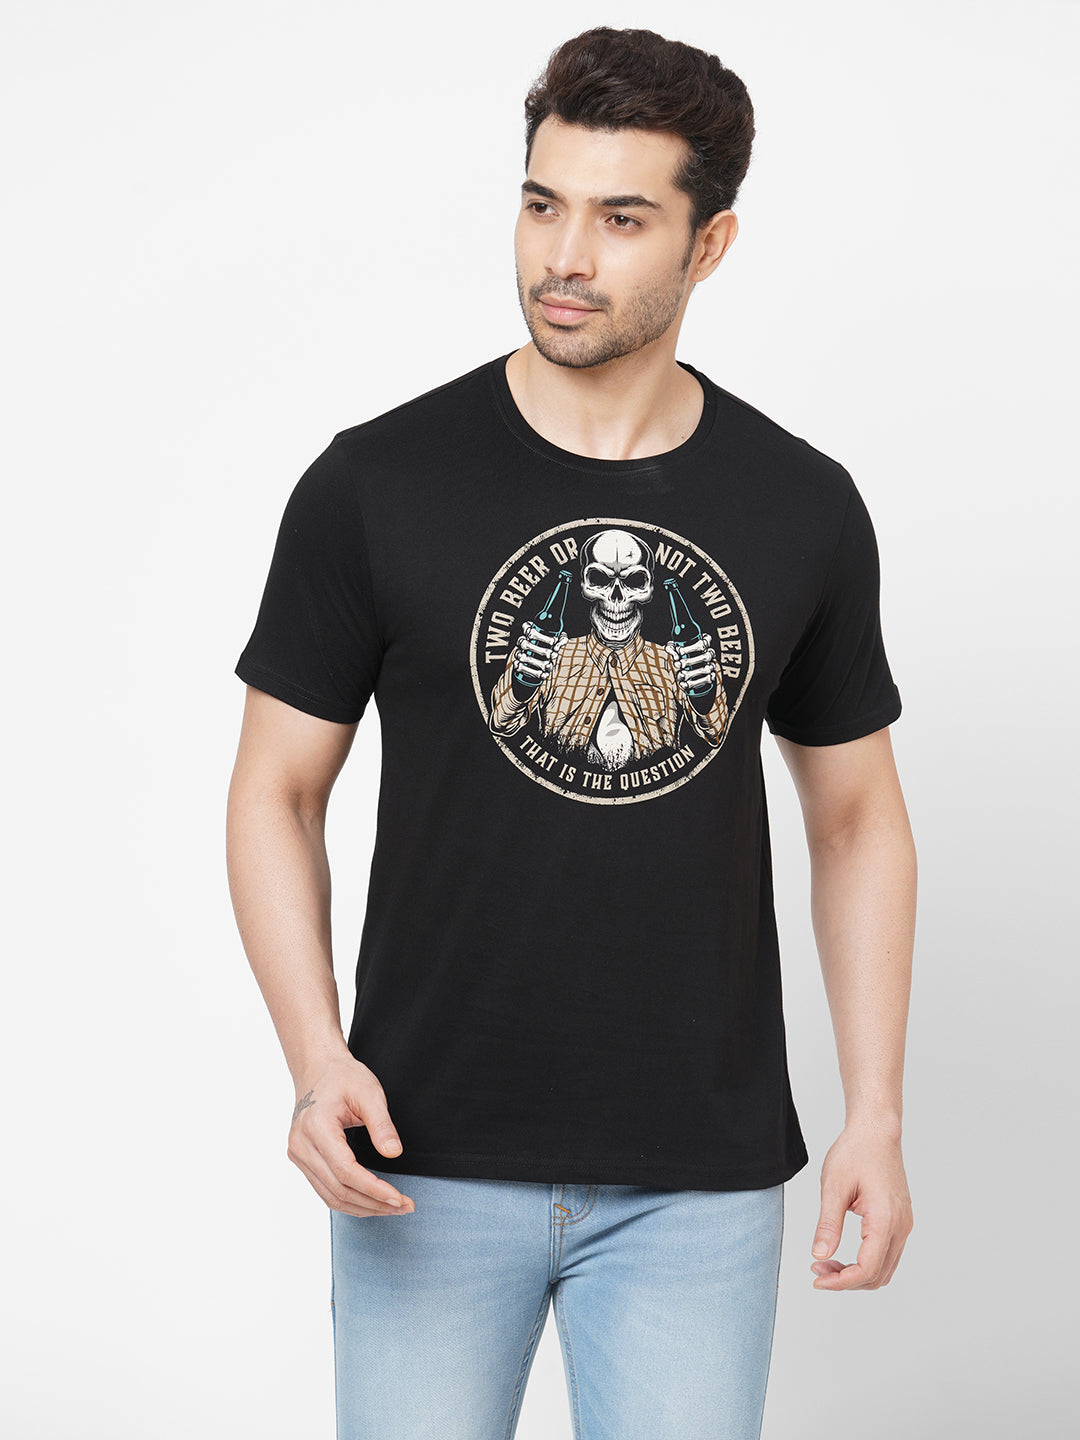 Men's Black Crew Neck Printed Regular Fit Tshirt